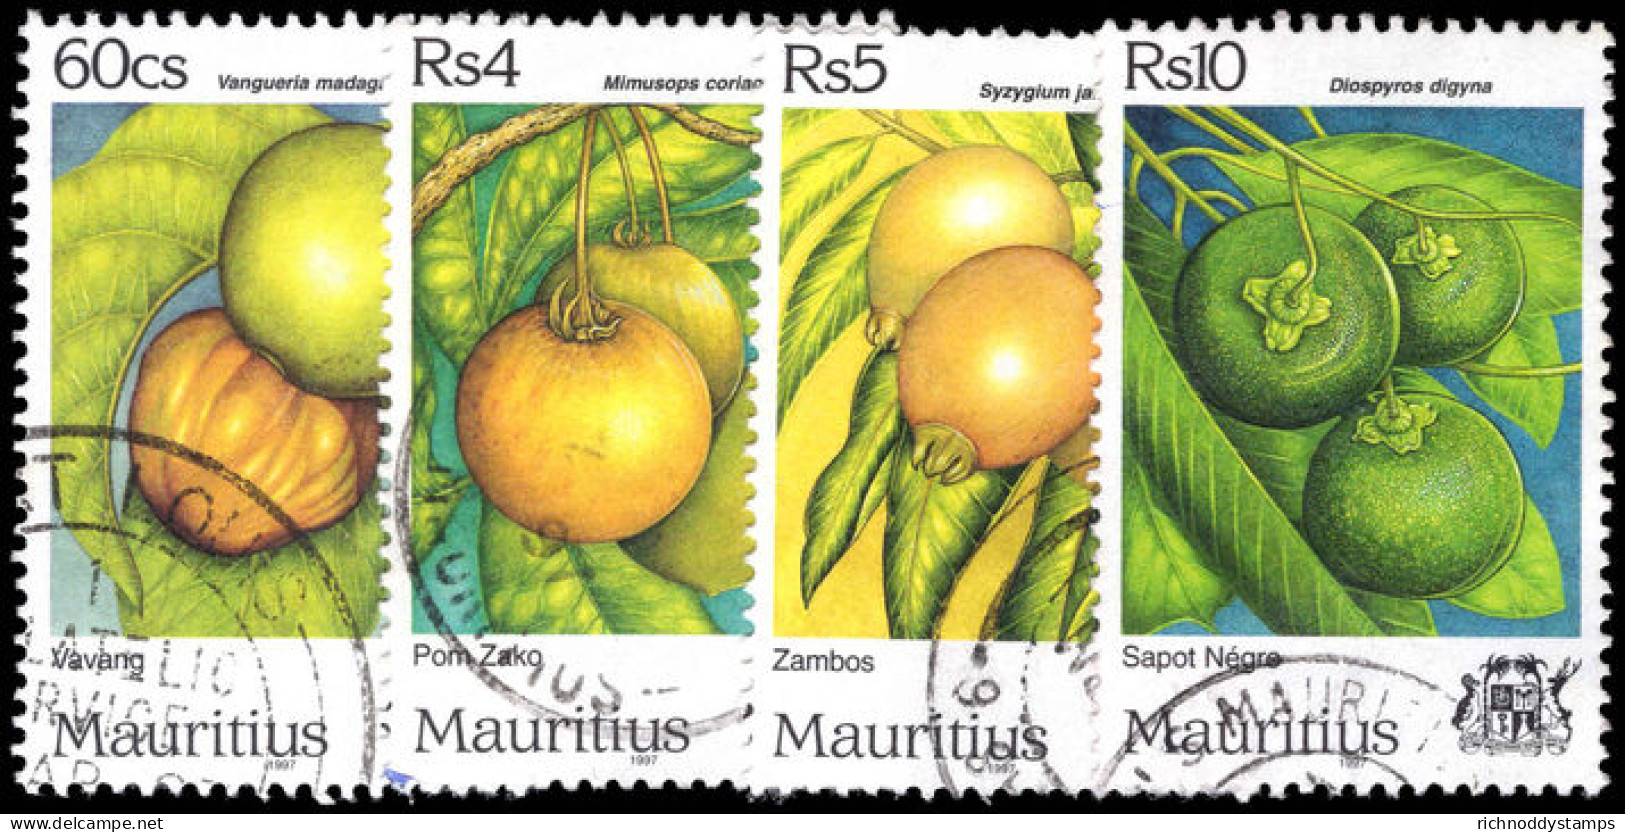 Mauritius 1997 Fruits Fine Used. - Maurice (1968-...)